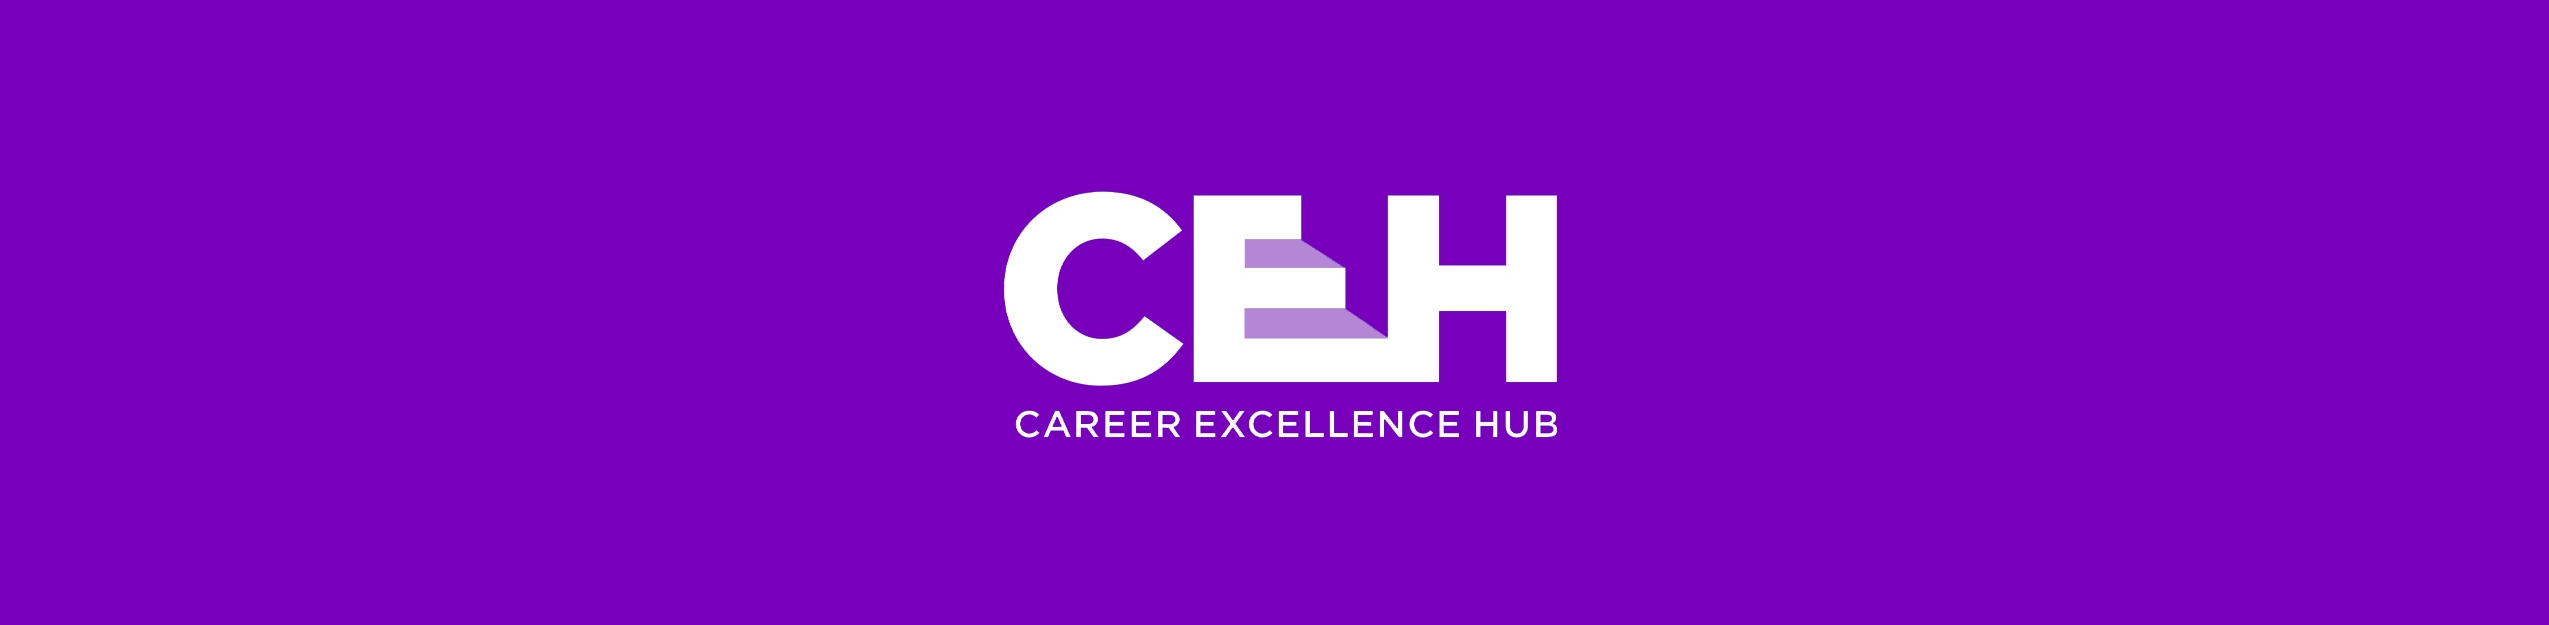 Career Excellence Hub logo